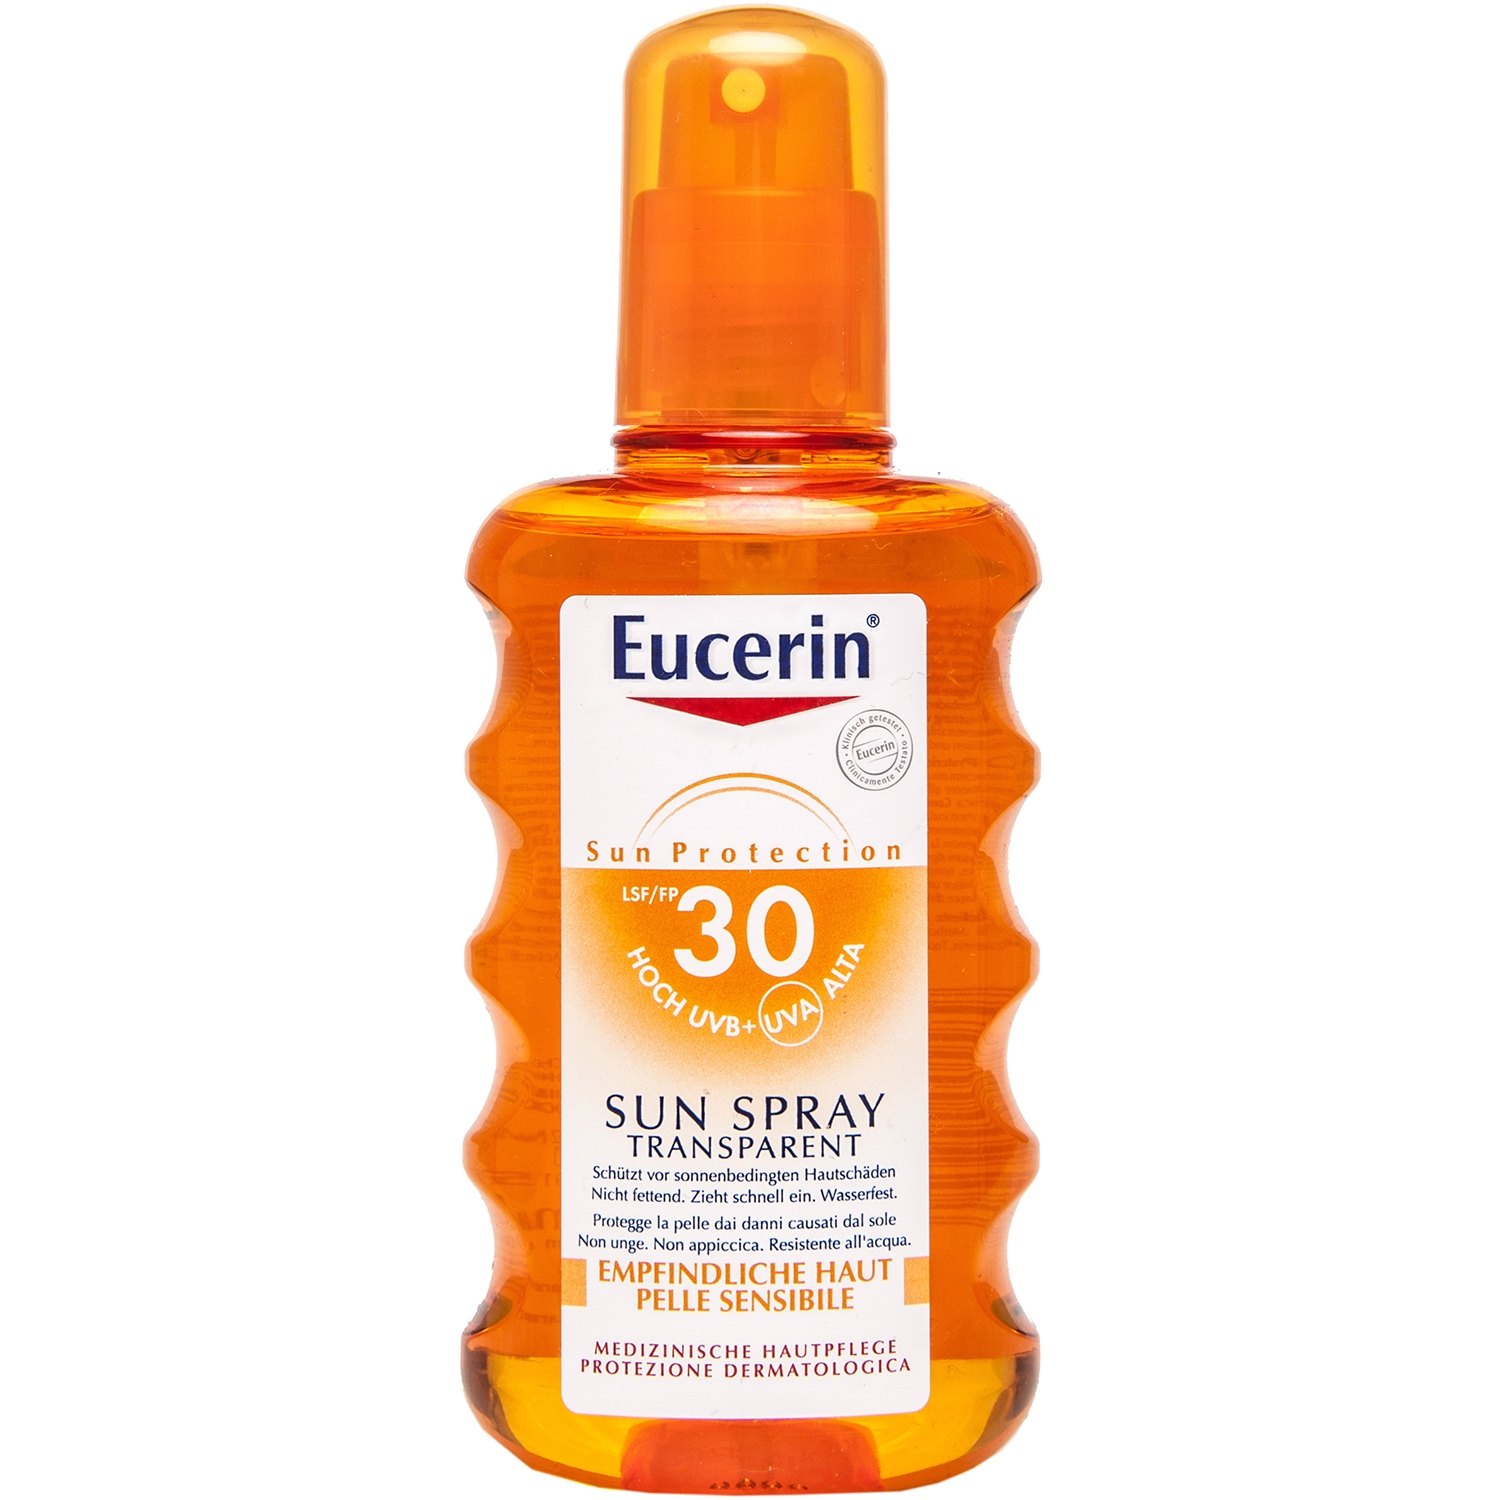 Eucerin sun spray transparent - 200 ml